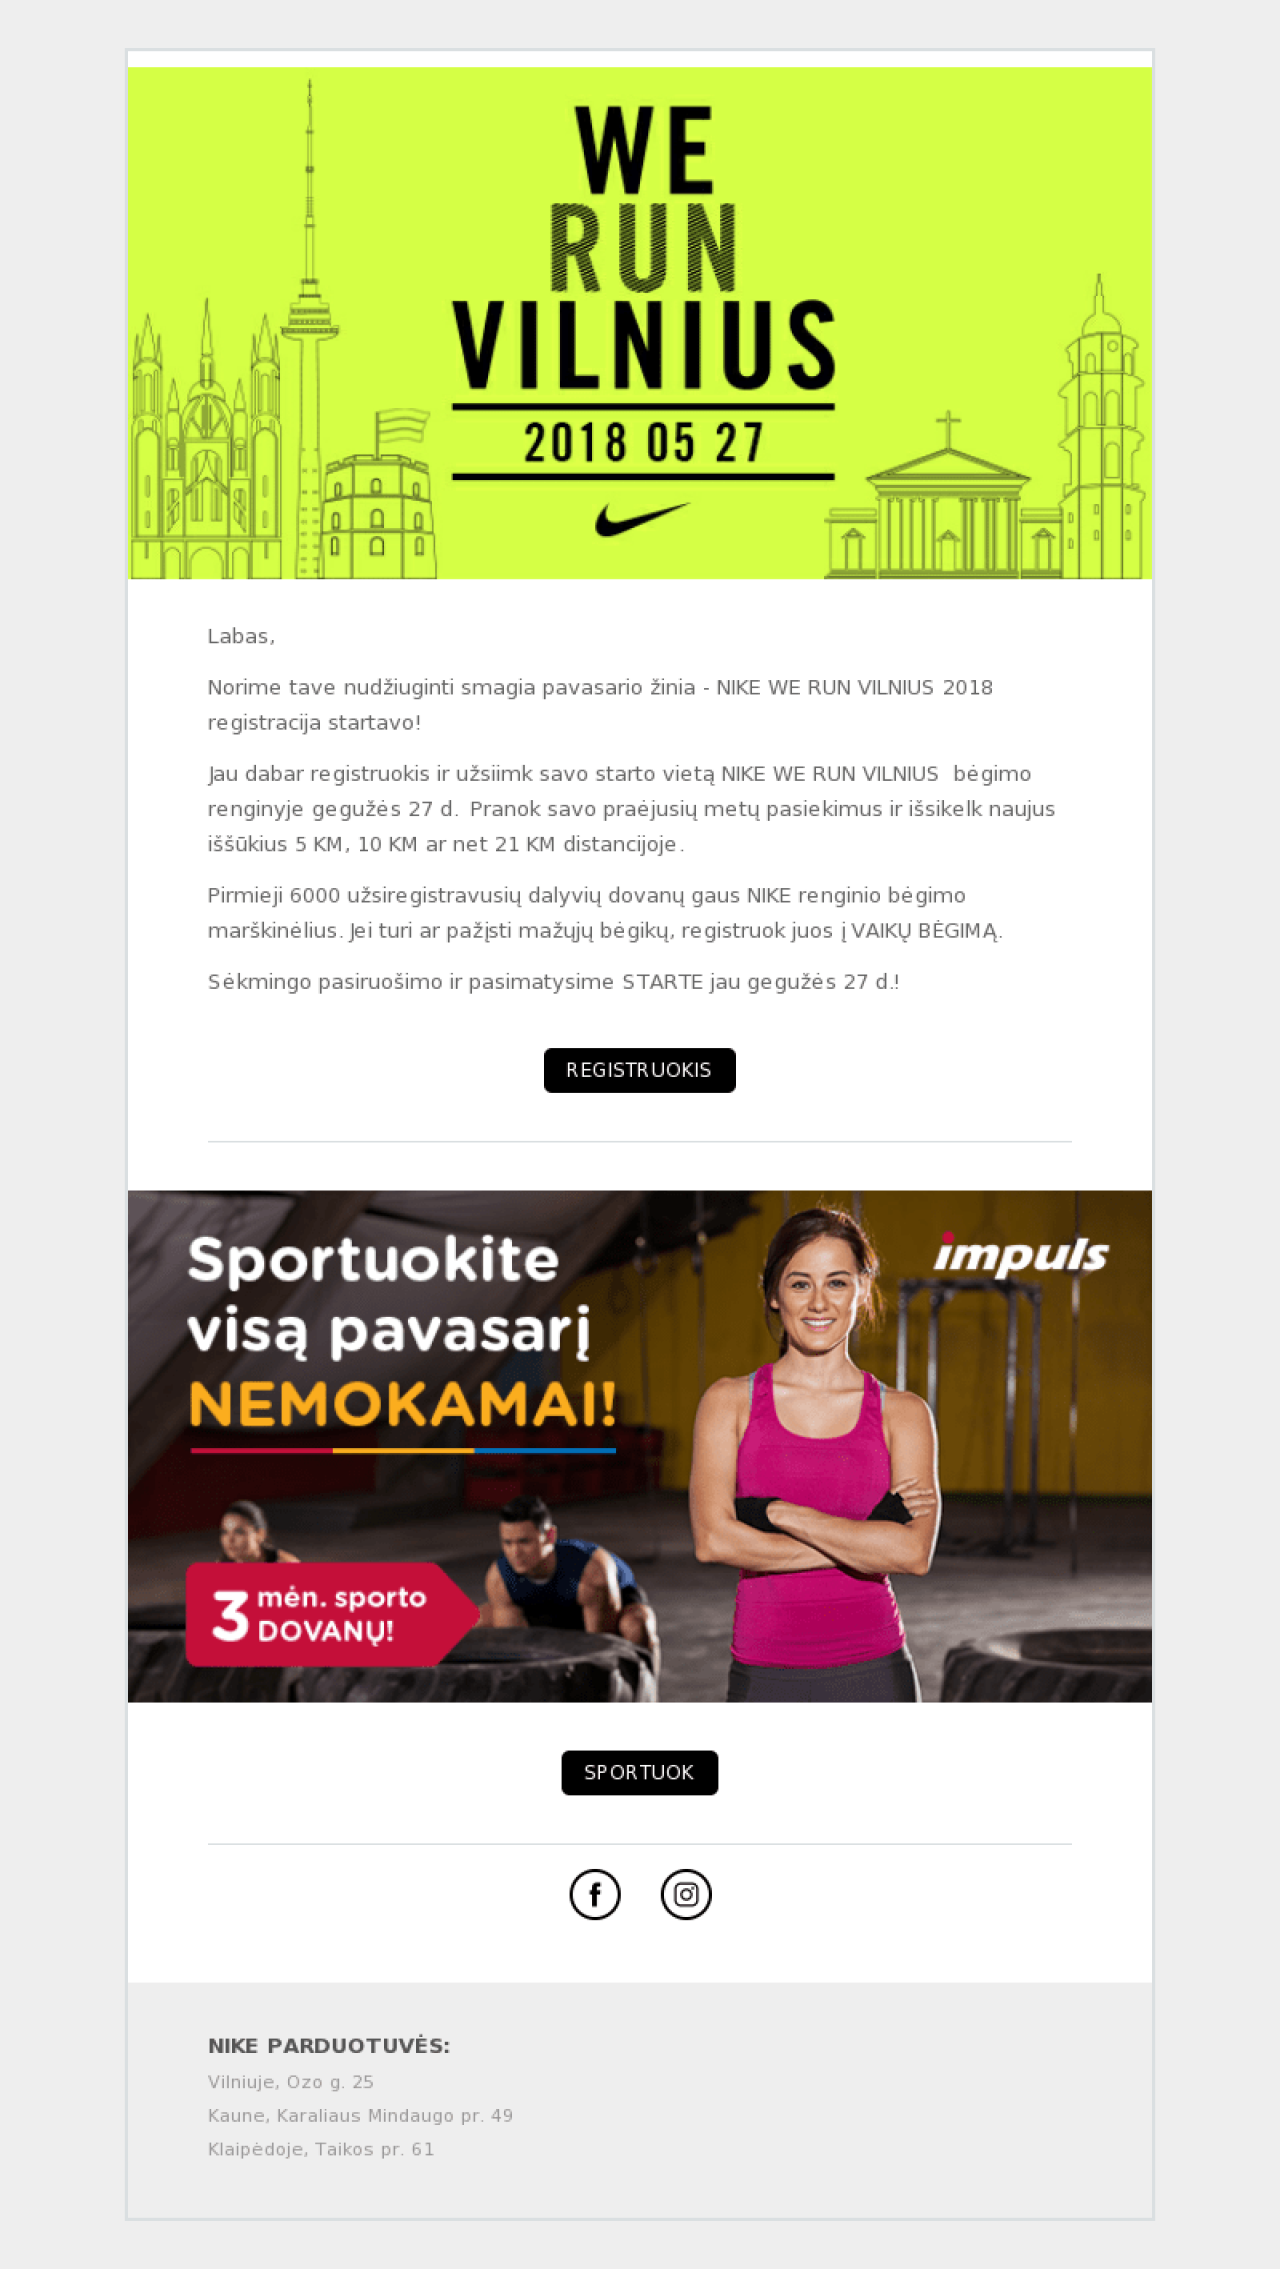 We Run Vilnius example - Made with MailerLite